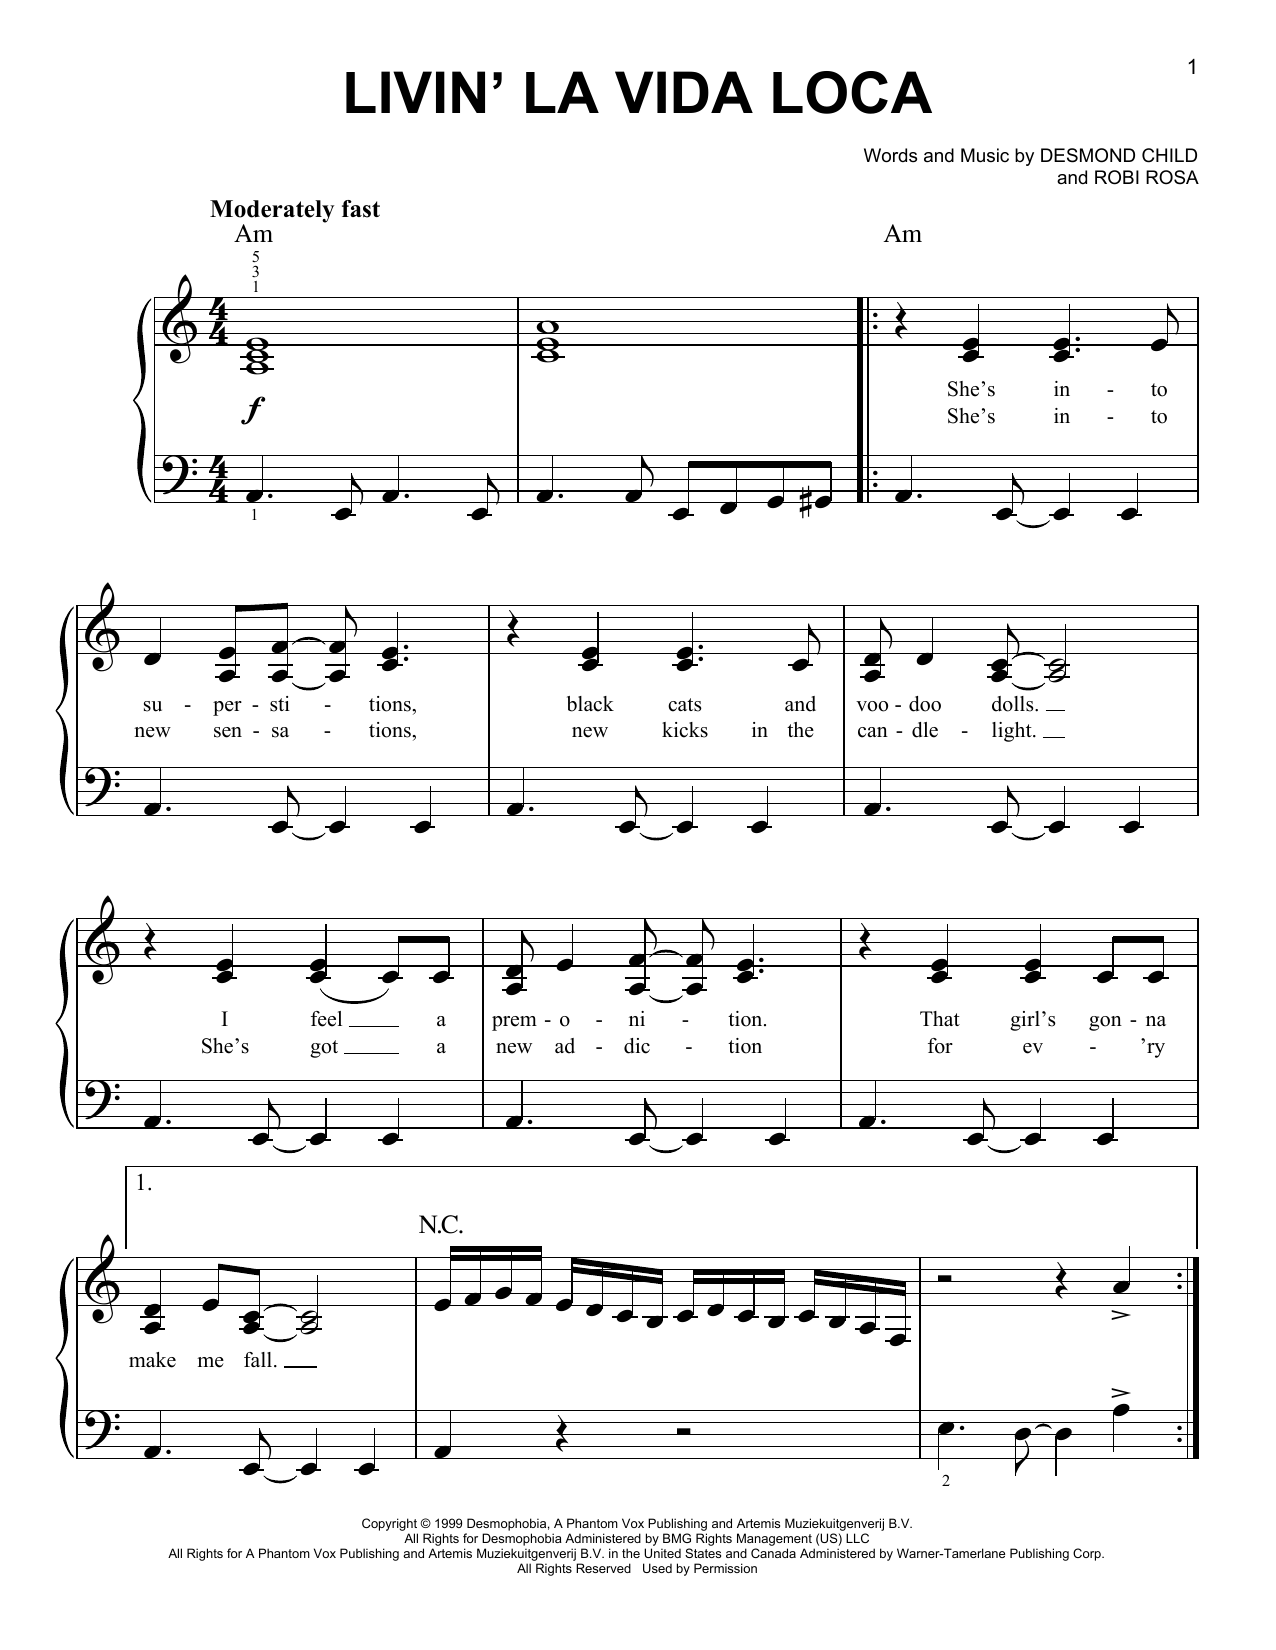 Eddie Murphy Livin' La Vida Loca Sheet Music Notes & Chords for Easy Piano - Download or Print PDF